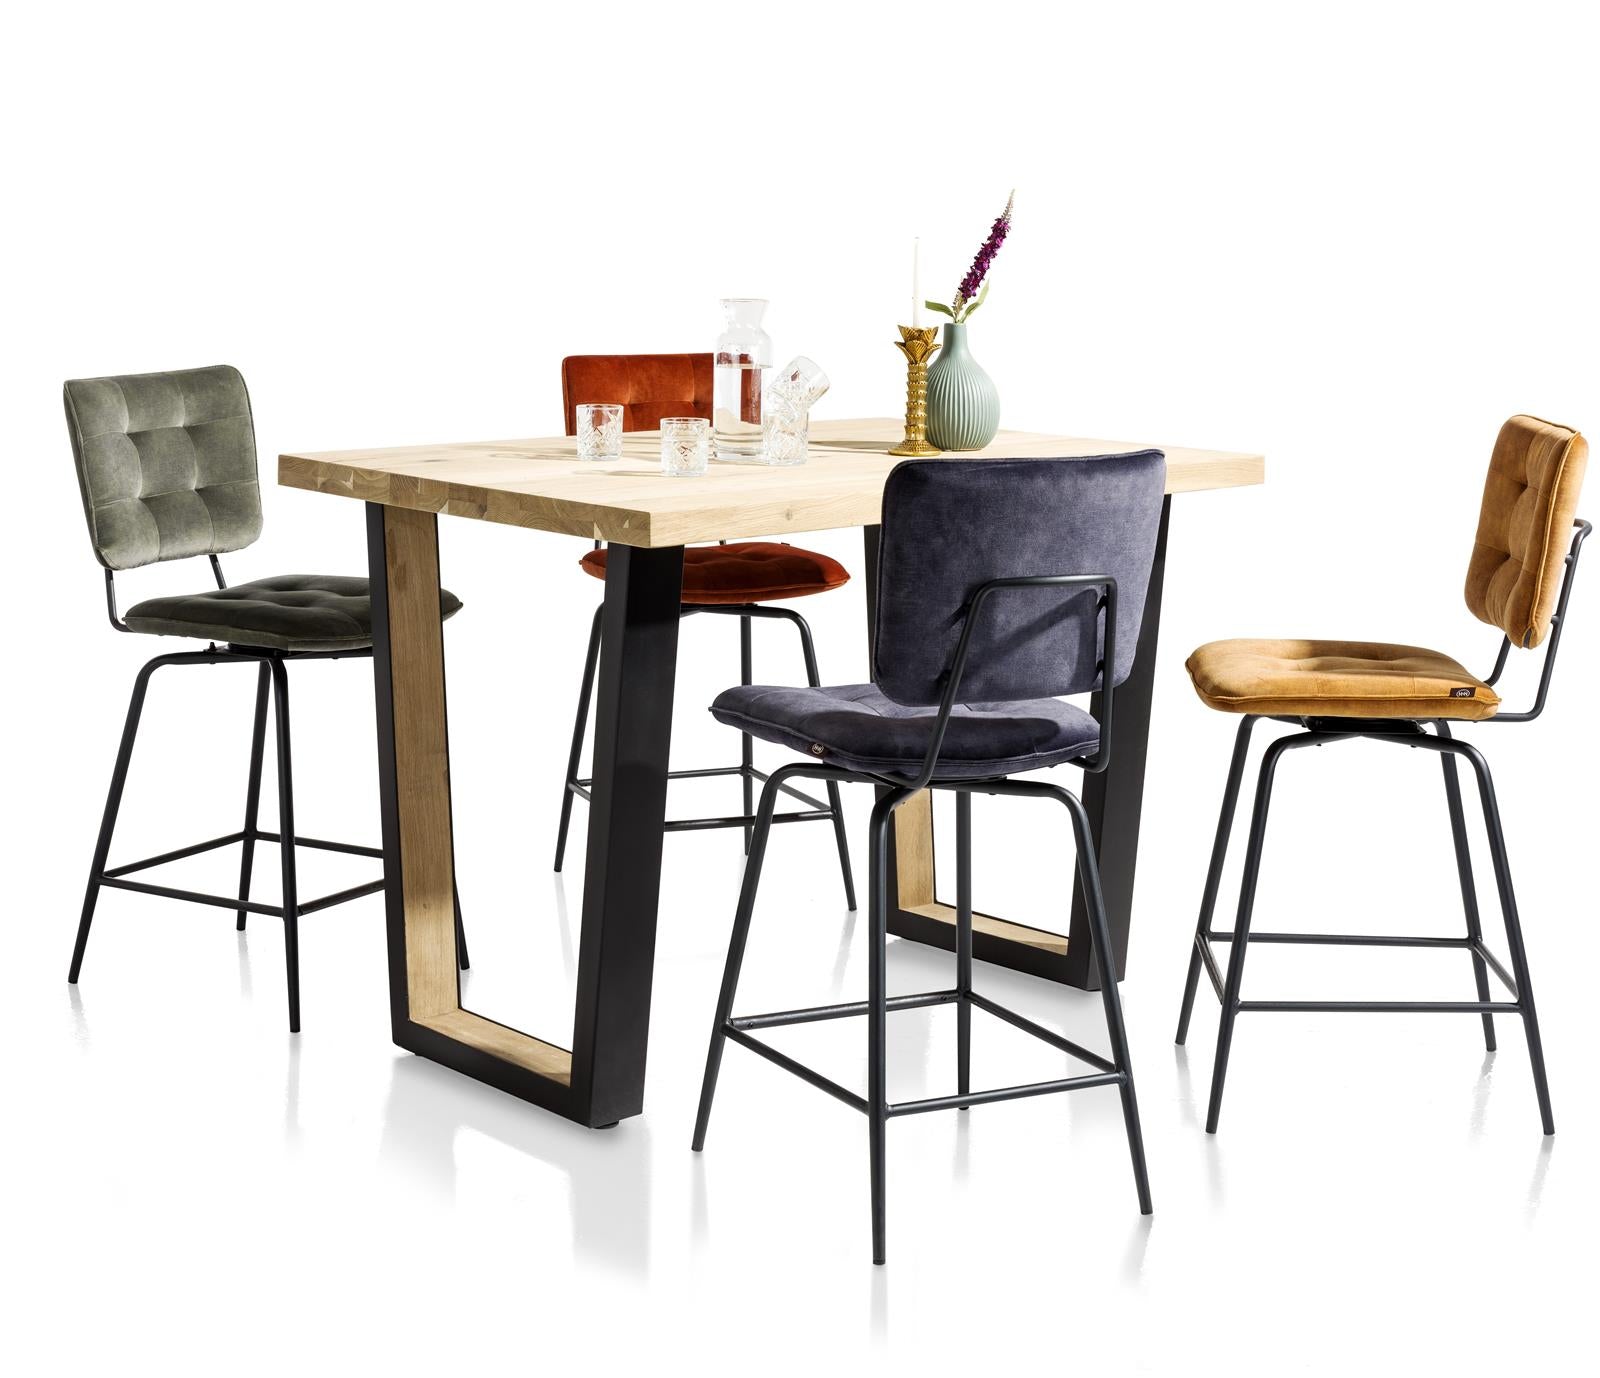 Habufa Metalox Bar Tables in Oak-bar Tables-Habufa-130 cms-U shape metal legs-Wavy edge-Against The Grain Furniture